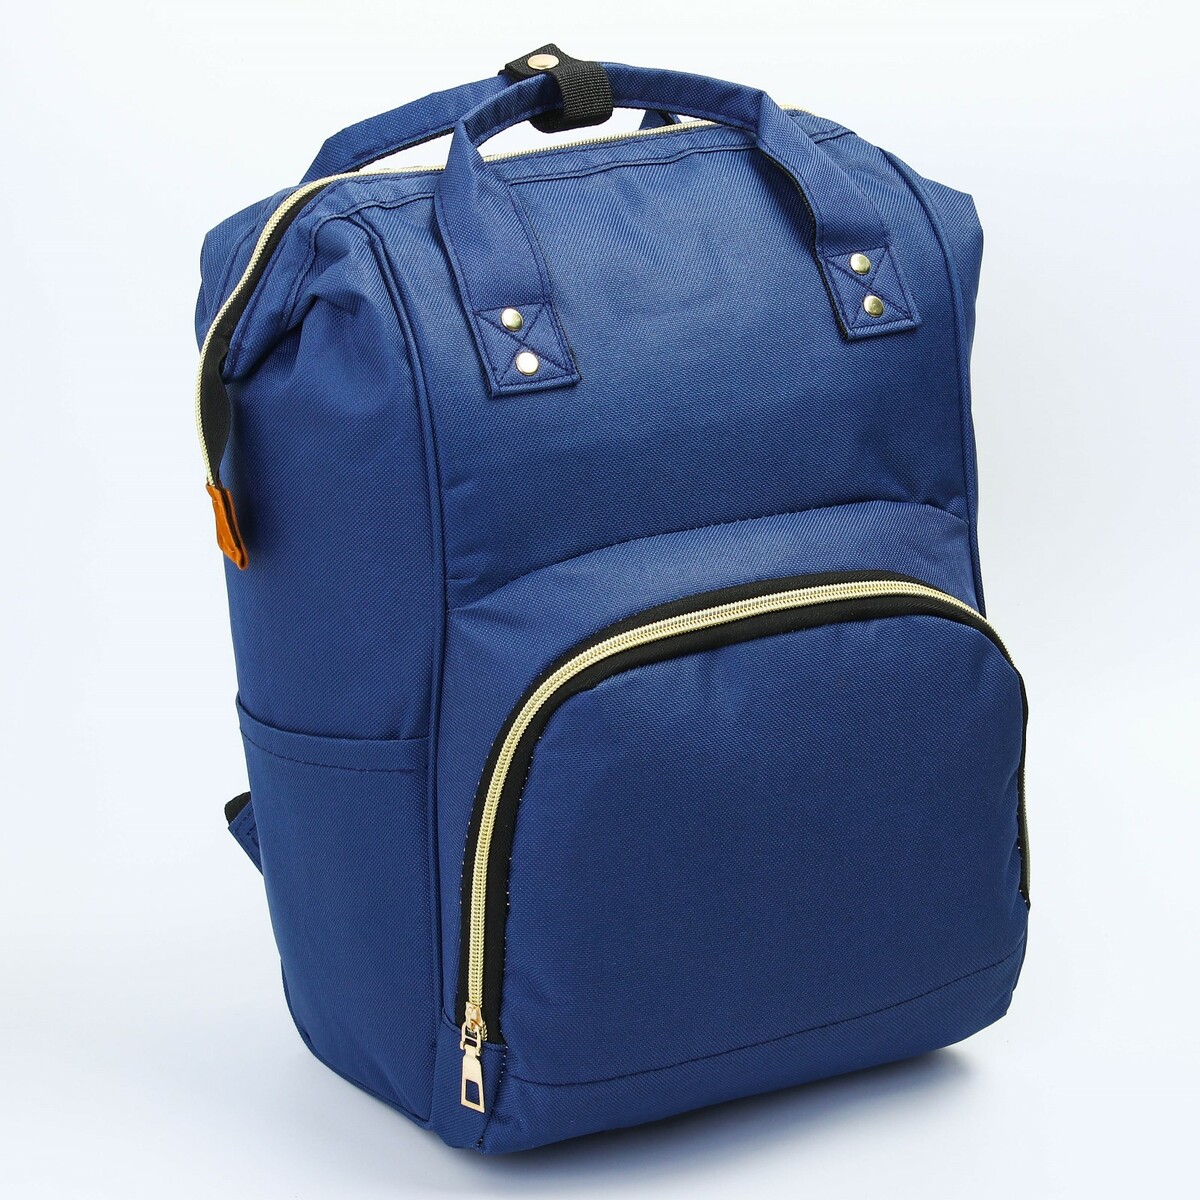 Рюкзак женский с термокарманом, термосумка - портфель, цвет синий рюкзак женский